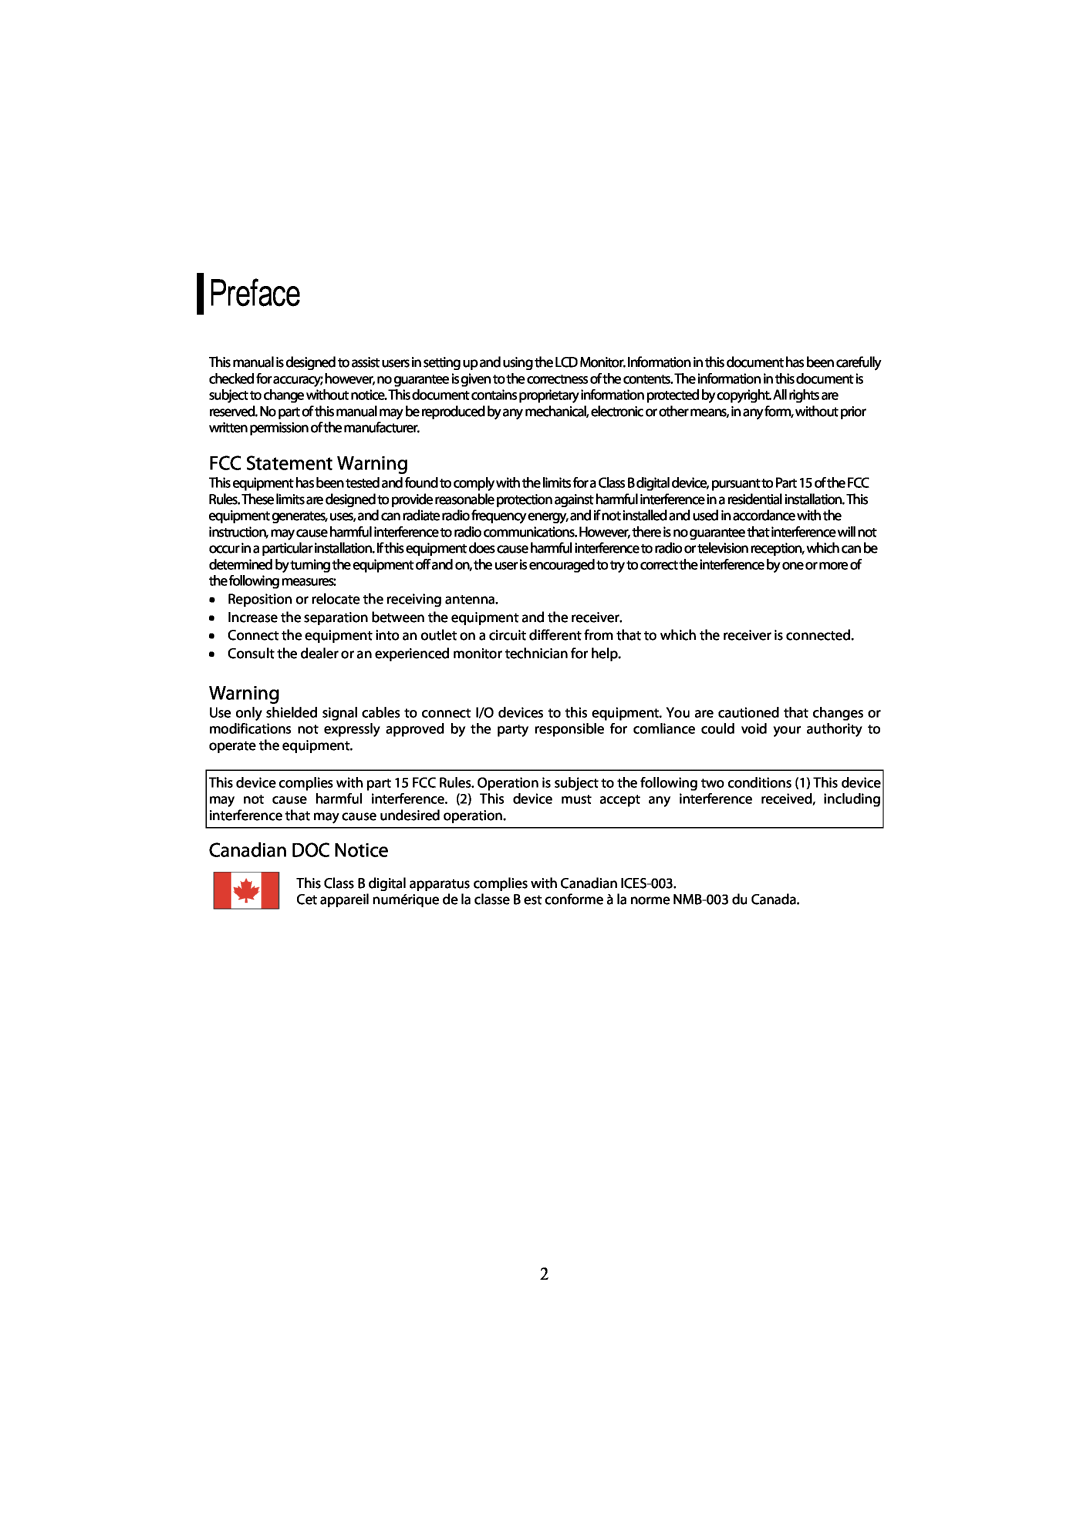 Planar PL2210MW manual Preface, FCC Statement Warning, Canadian DOC Notice 